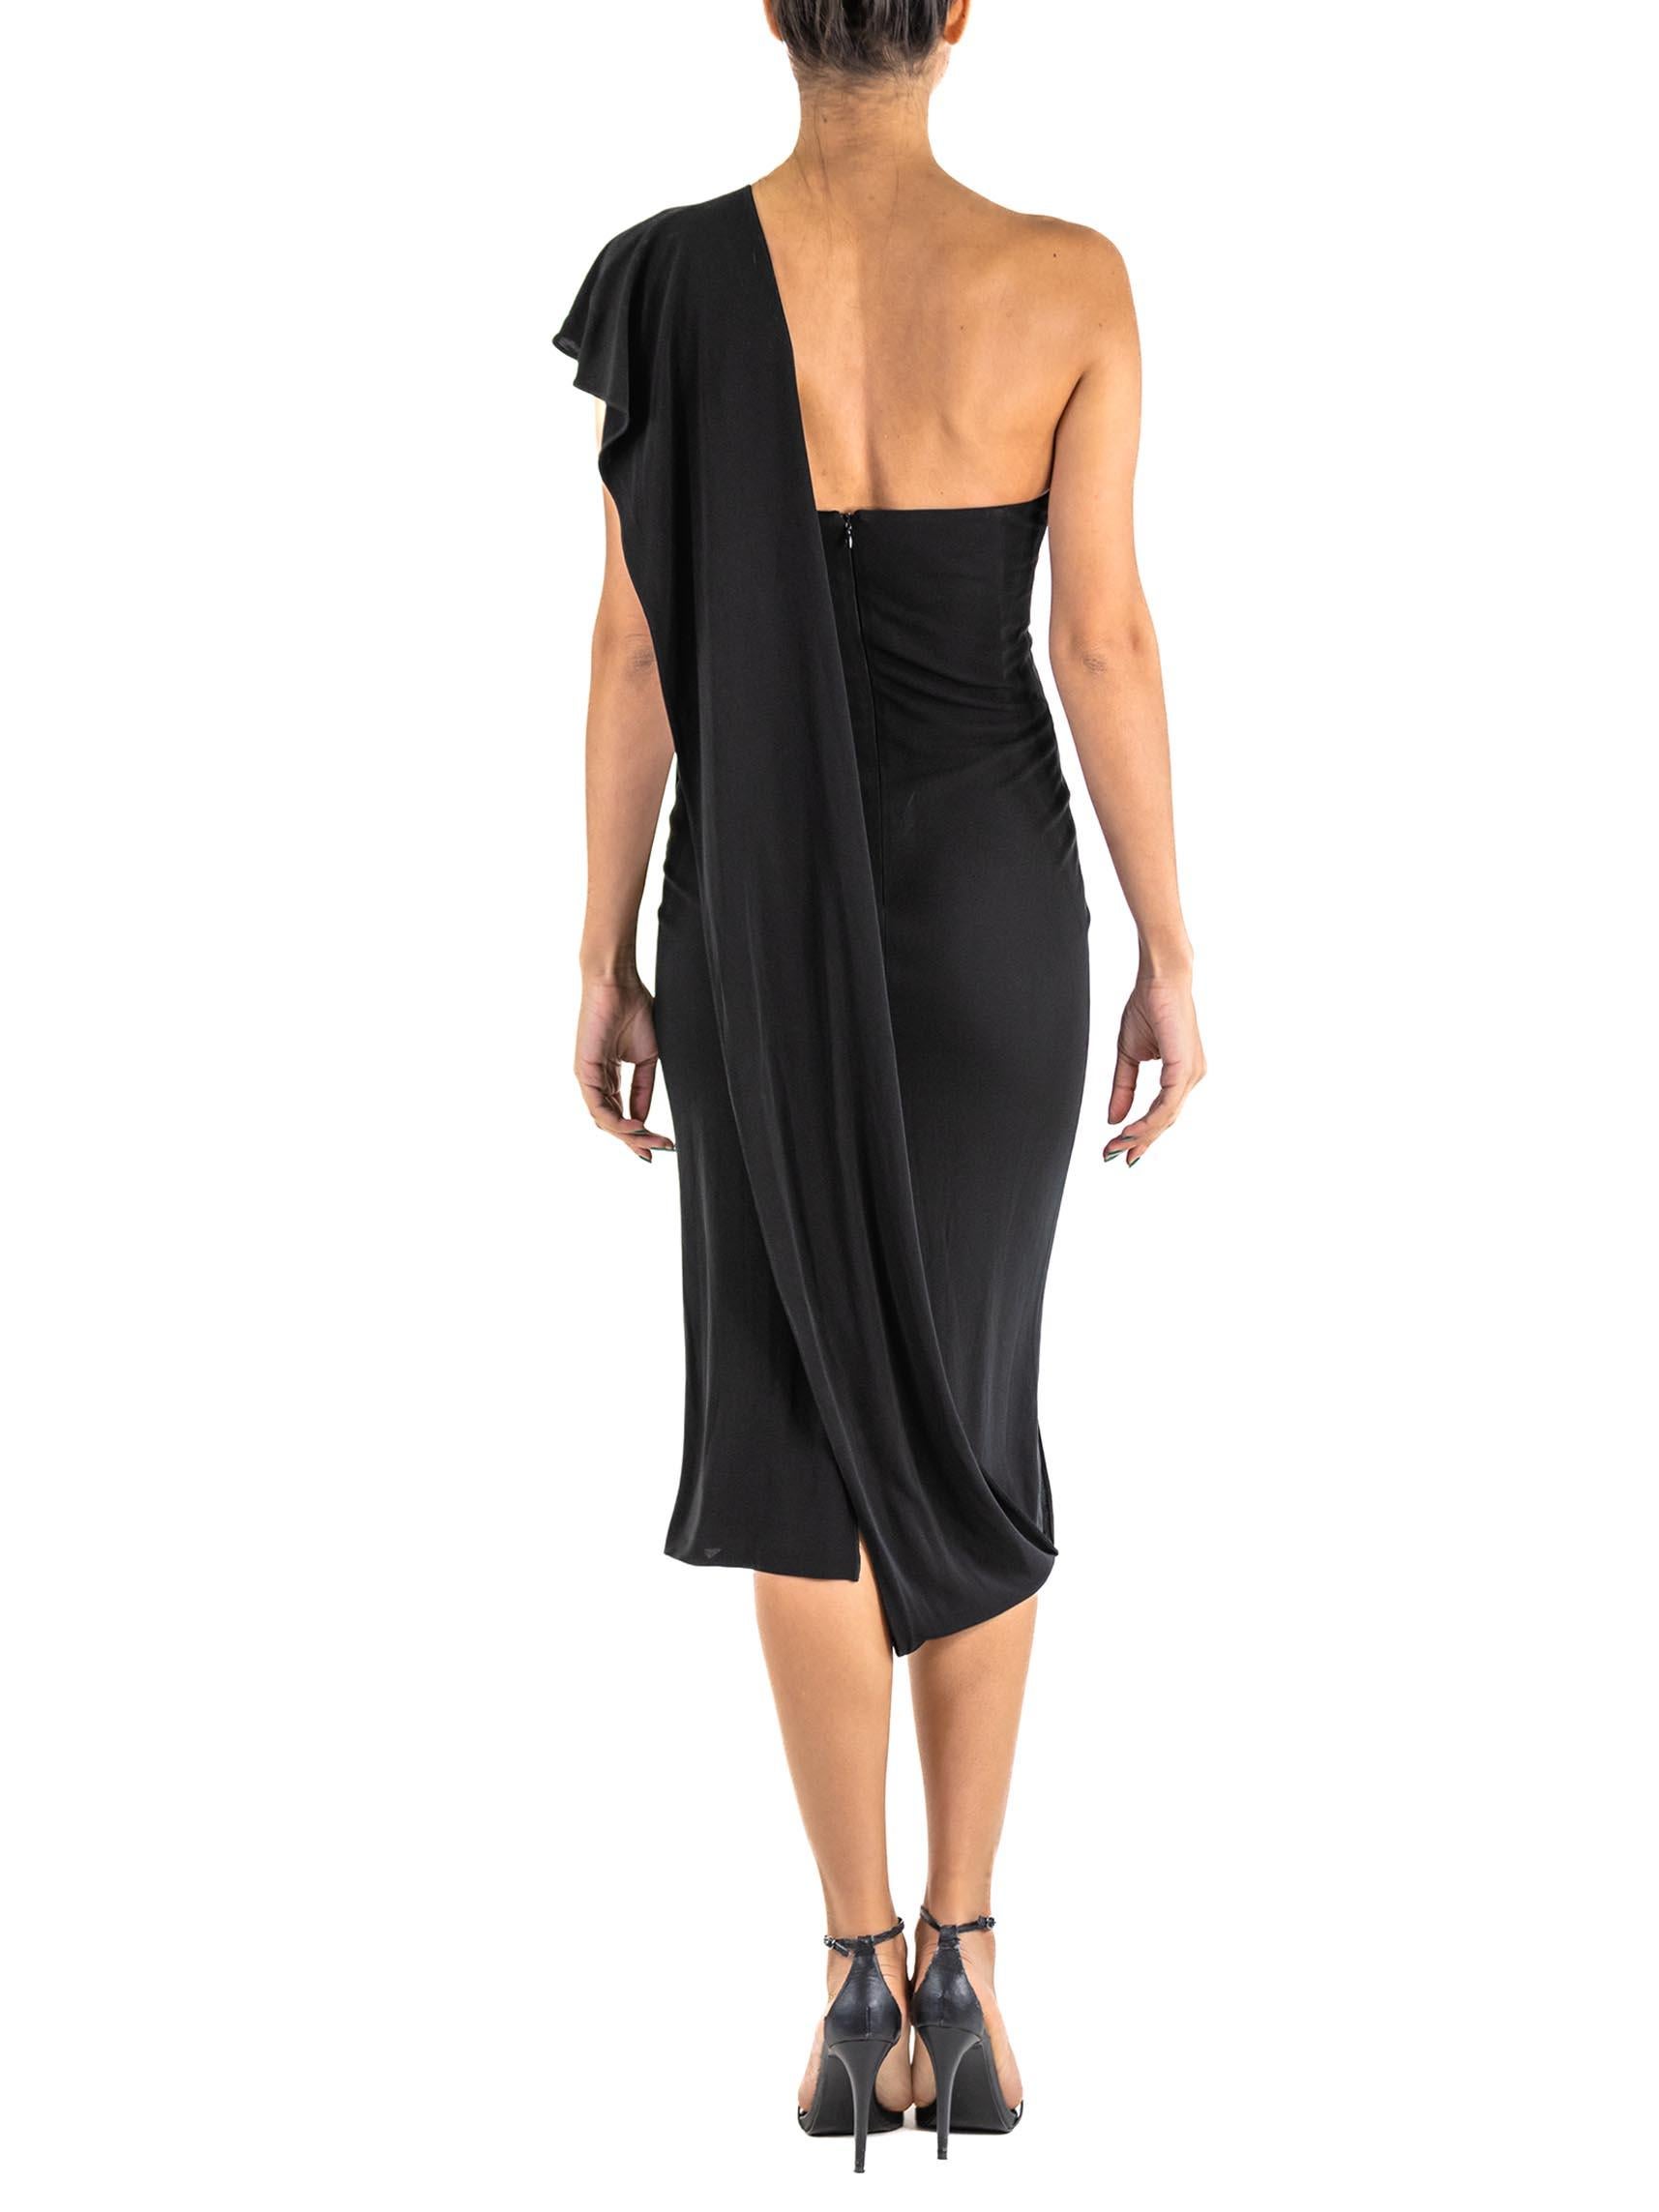 1990S HERVE LEGER Black Rayon Blend Strapless Dress With One Shoulder Sash For Sale 4